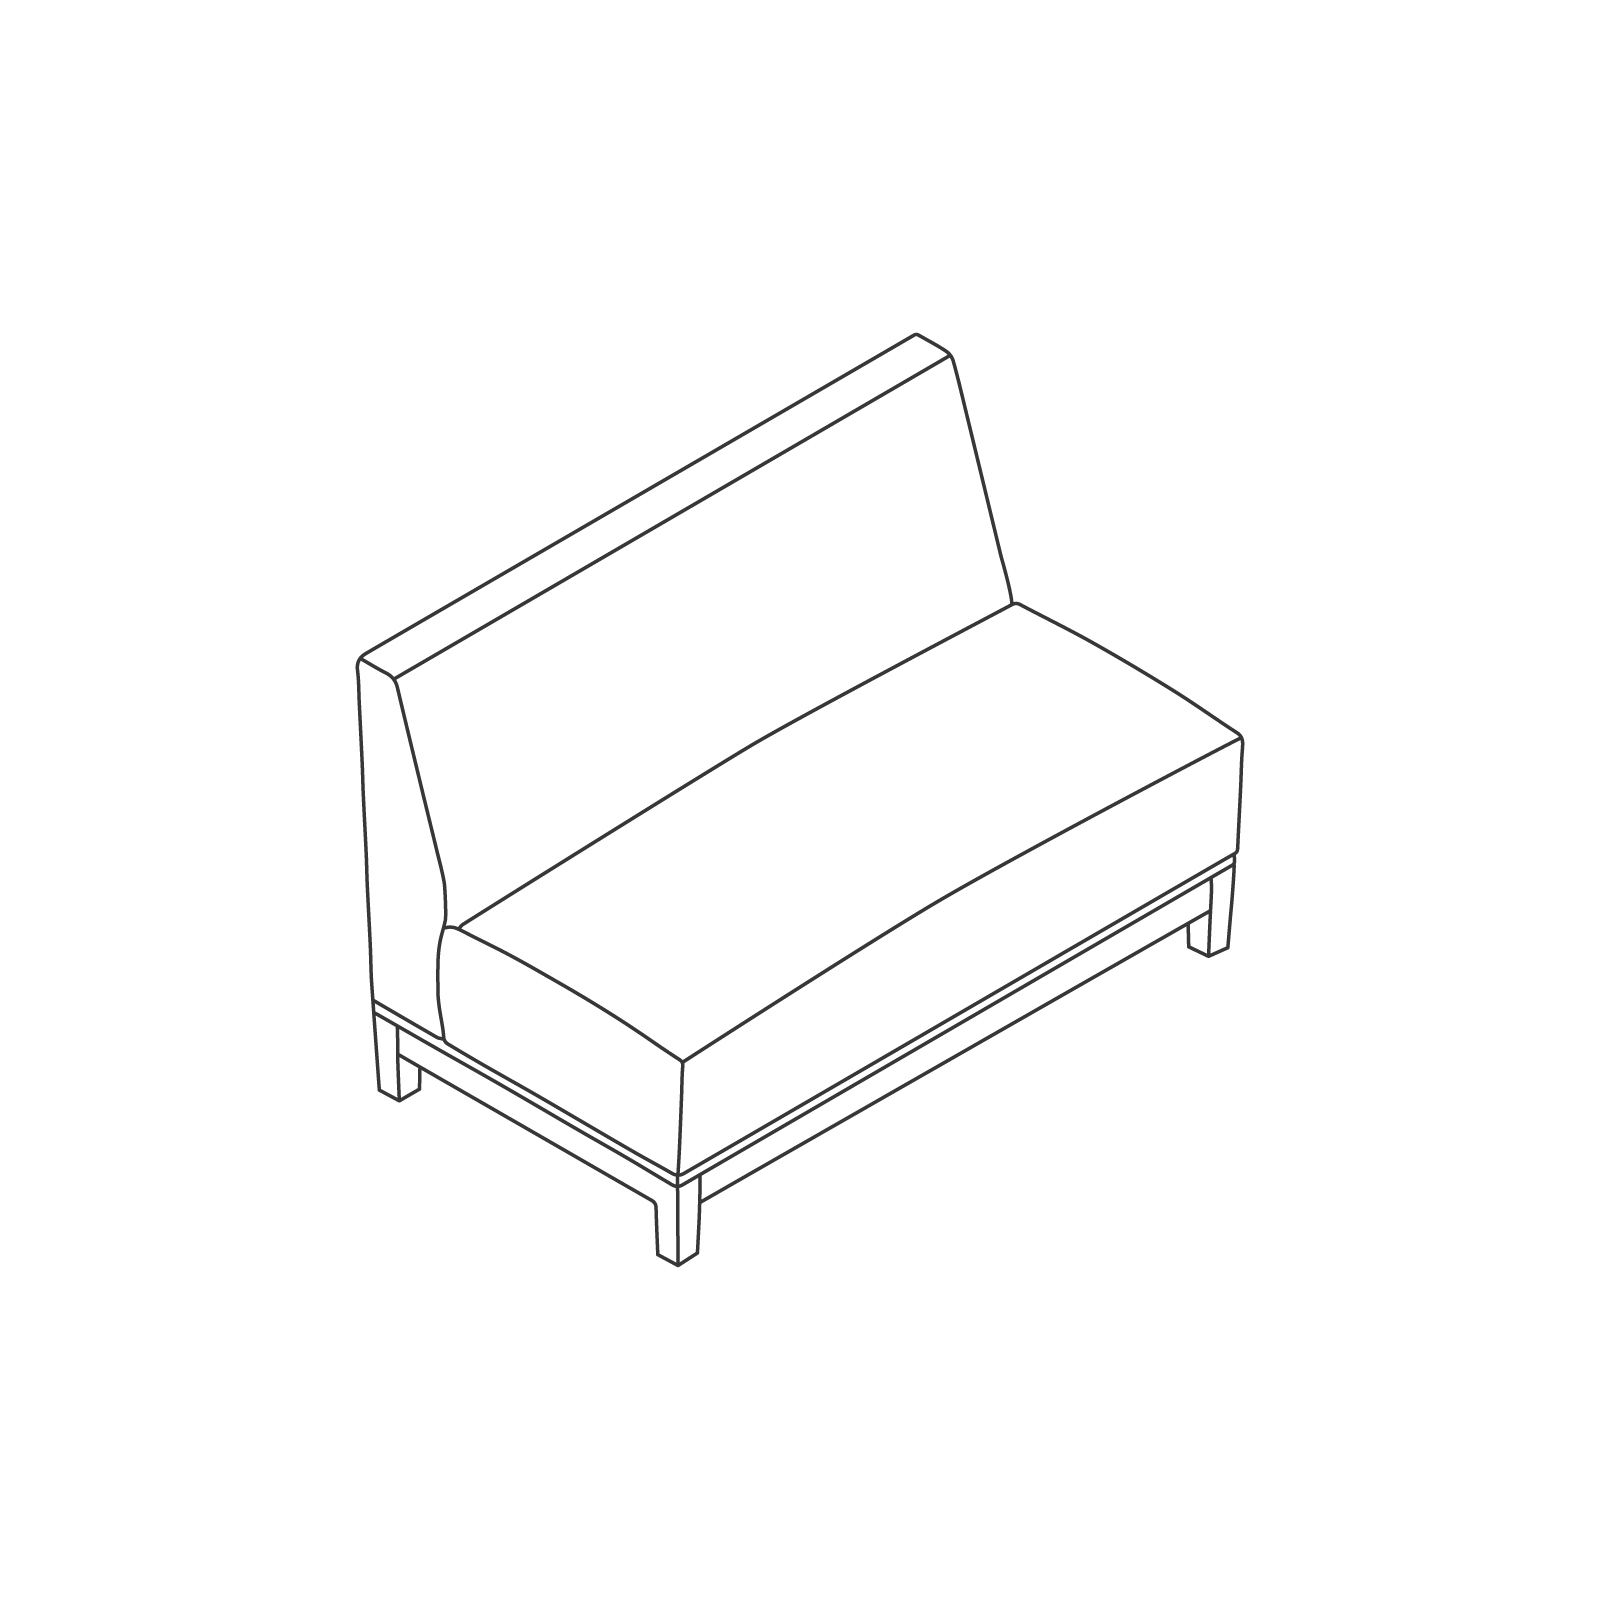 A line drawing - Nemschoff Brava Platform Multiple Seating–2 Seat–Armless